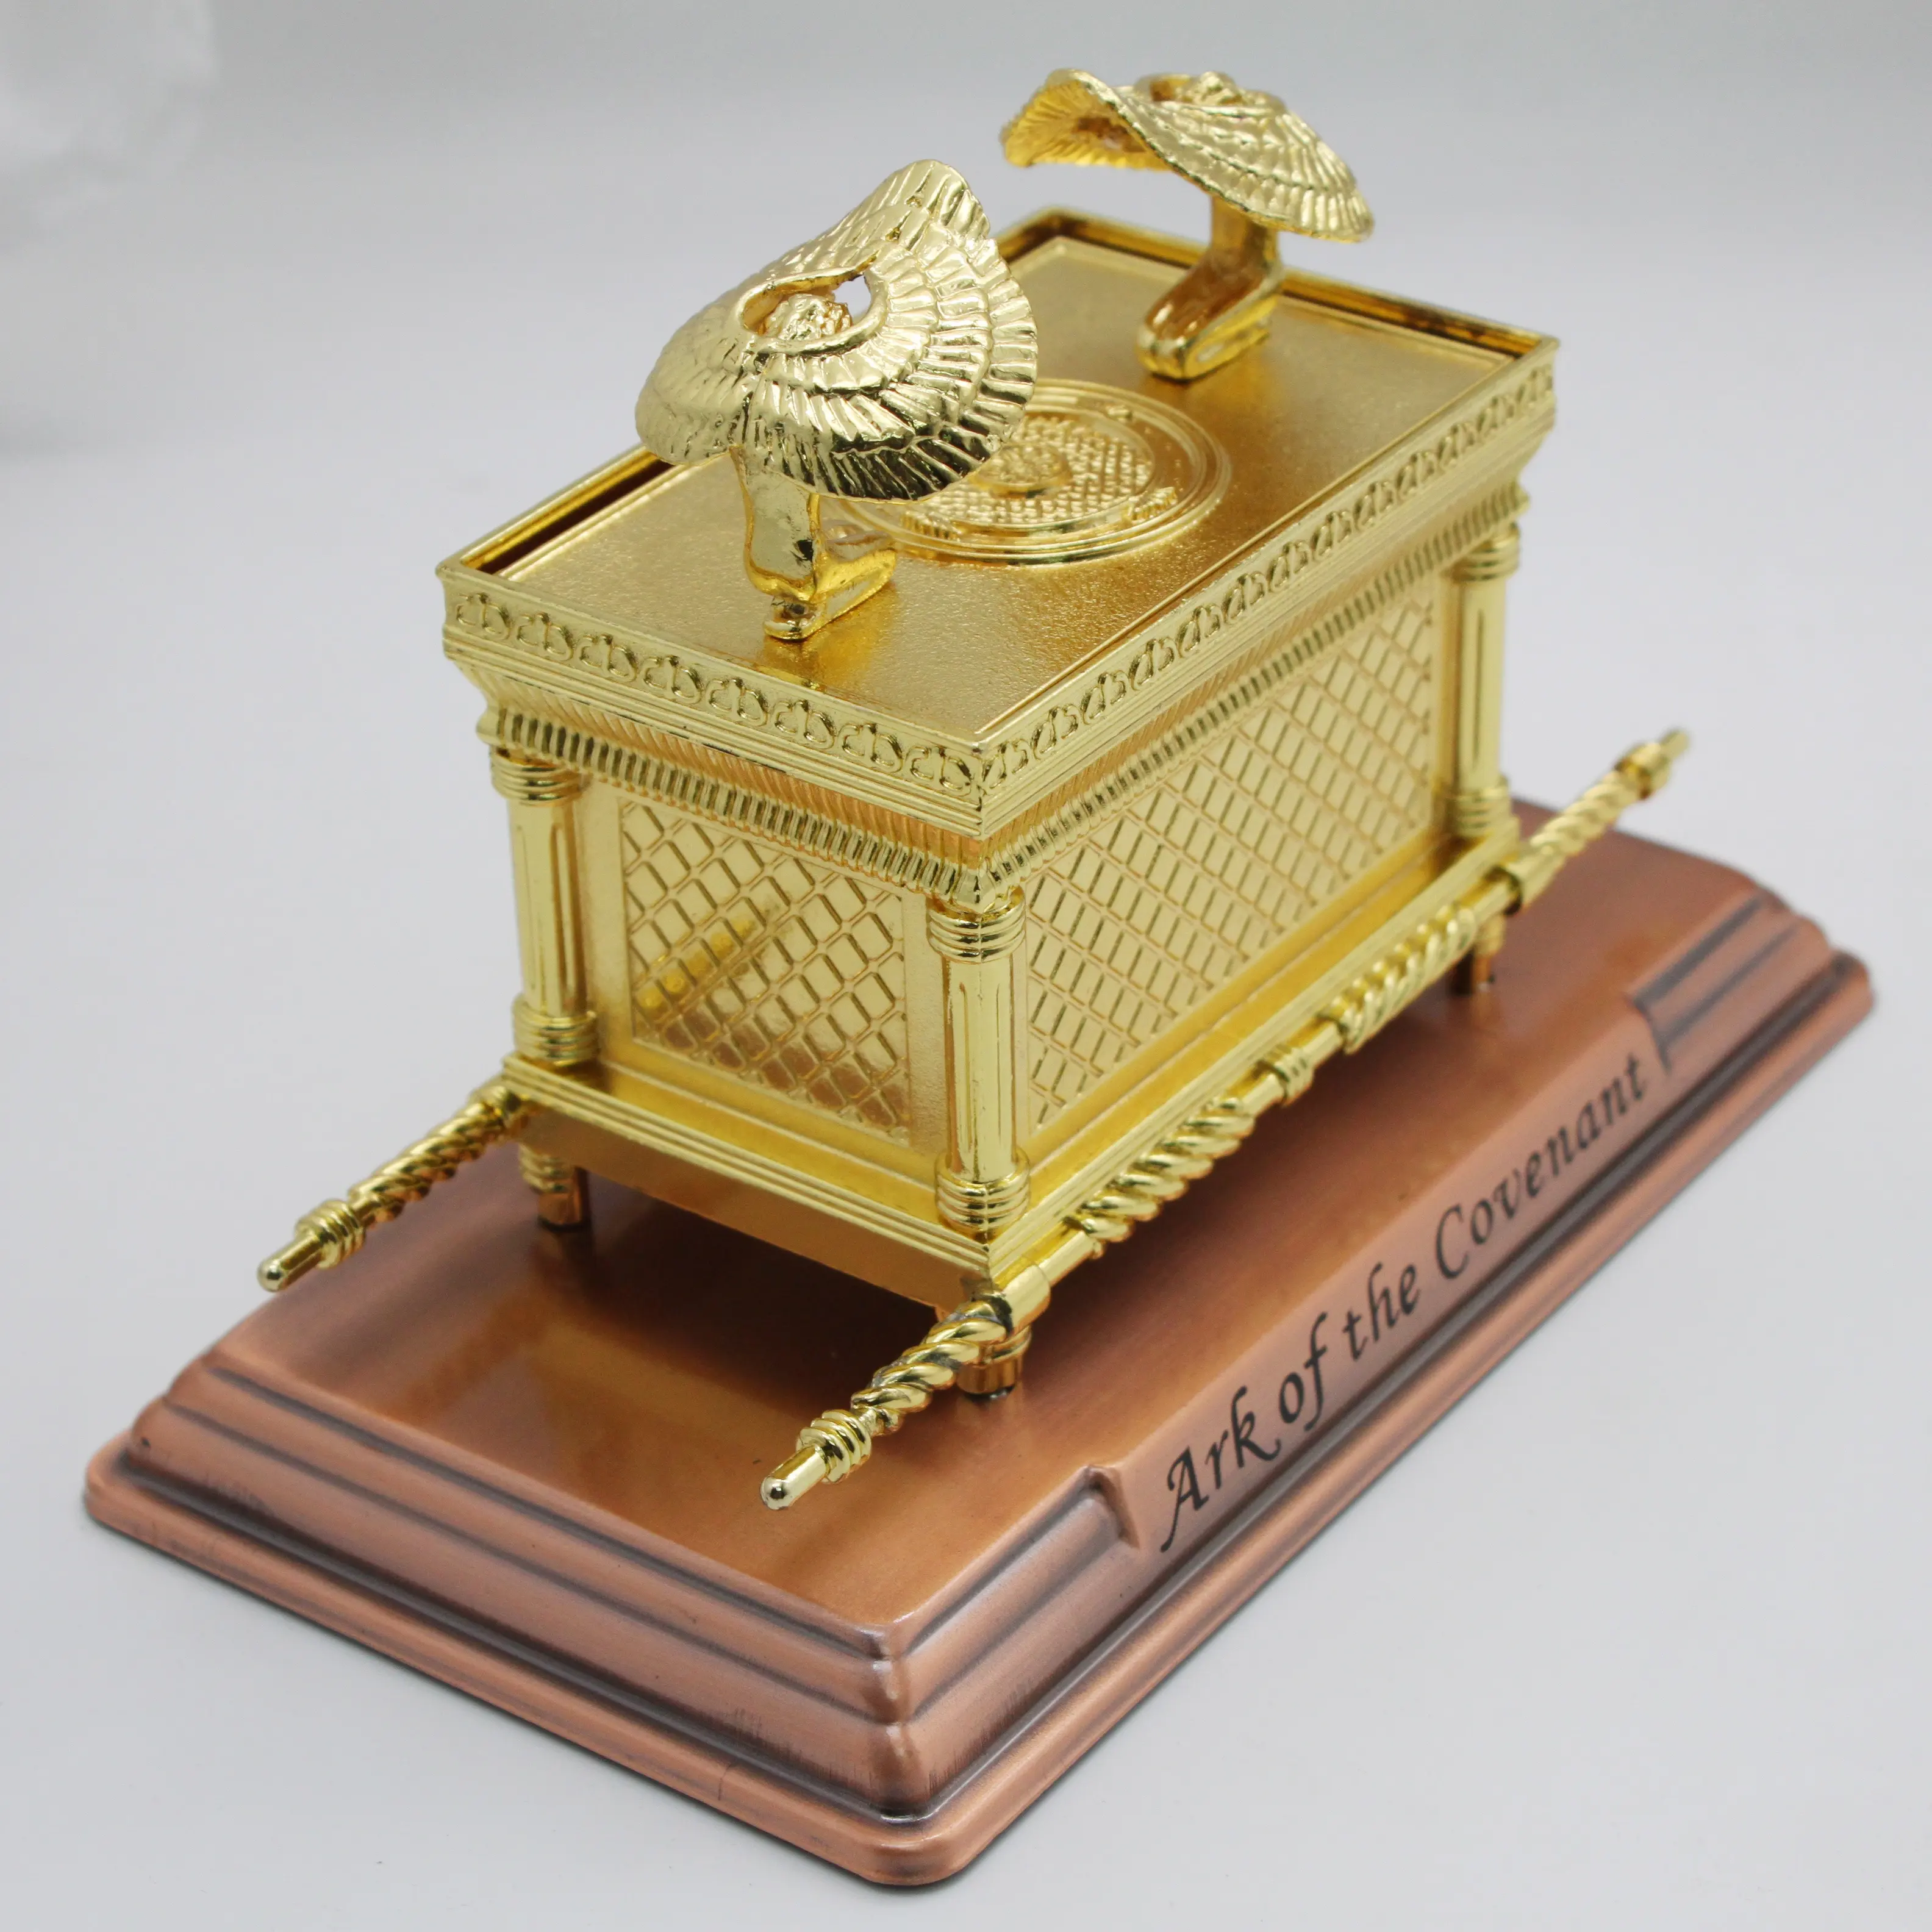 Medium Model Ark of the agreant Yahudi kesaksian Judaica Israel Gift